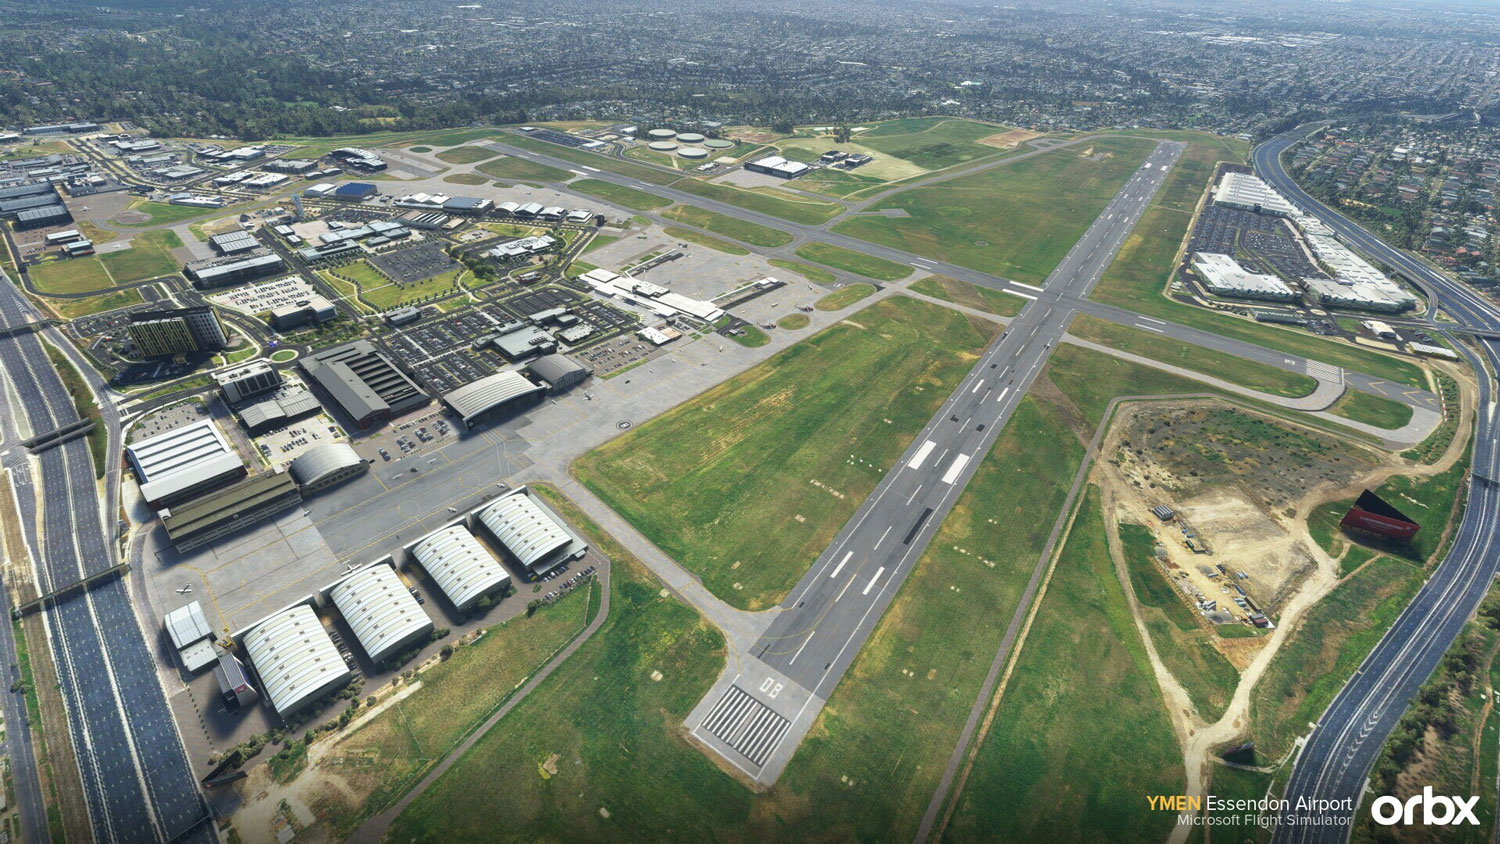 Orbx - YMEN Essendon Airport MSFS